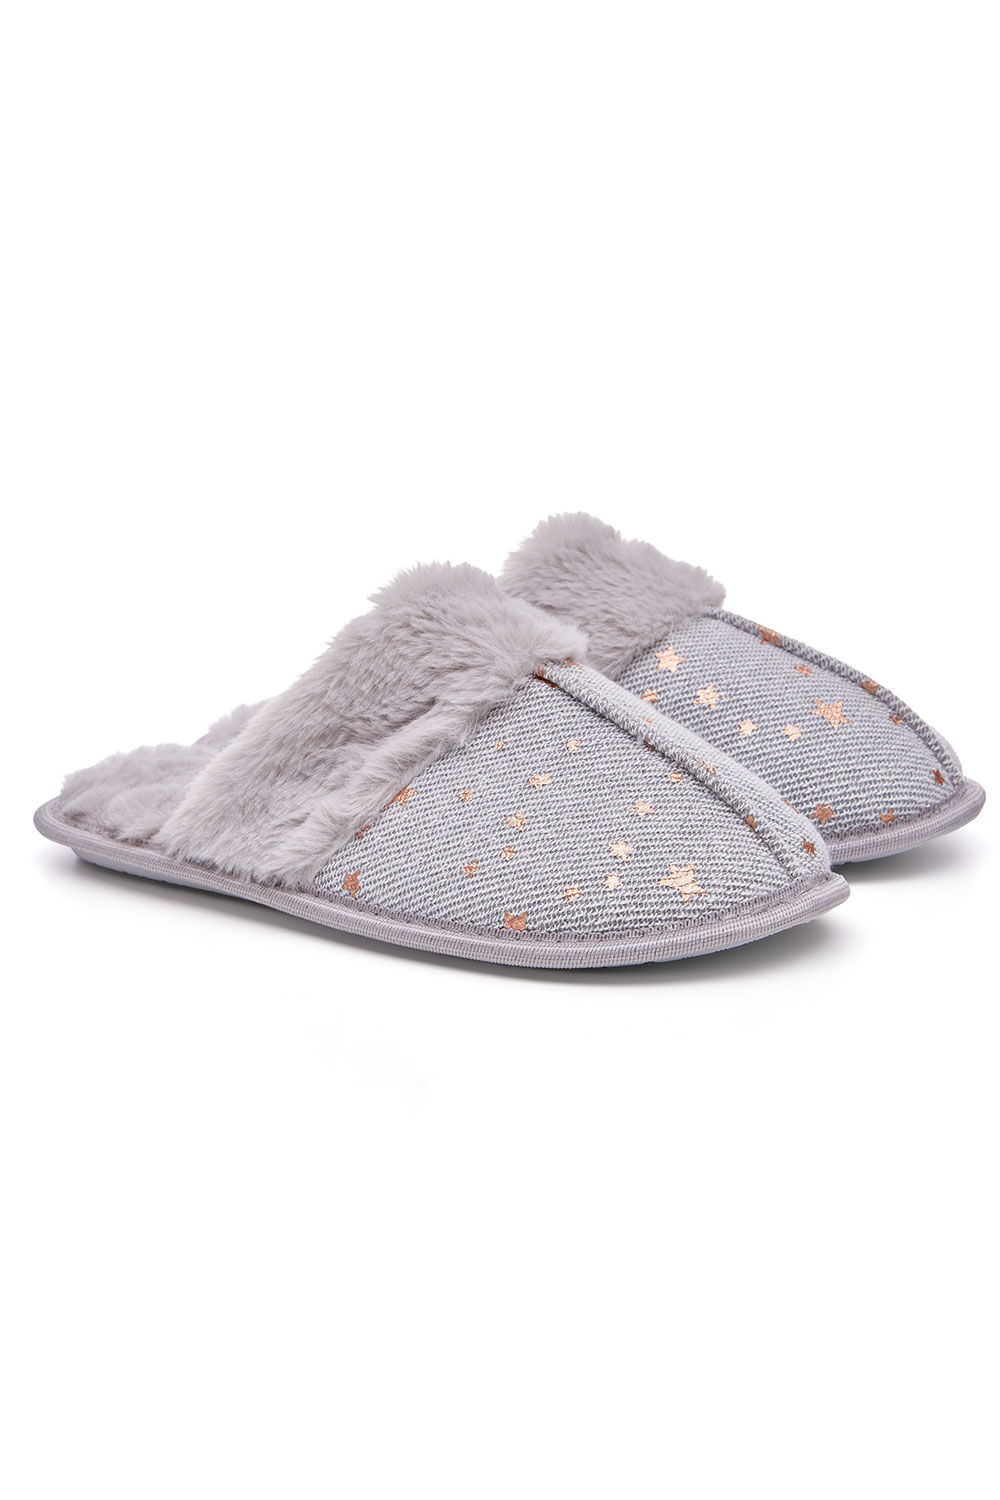 bonmarche grey foil star design slippers with fur trim, size: 3